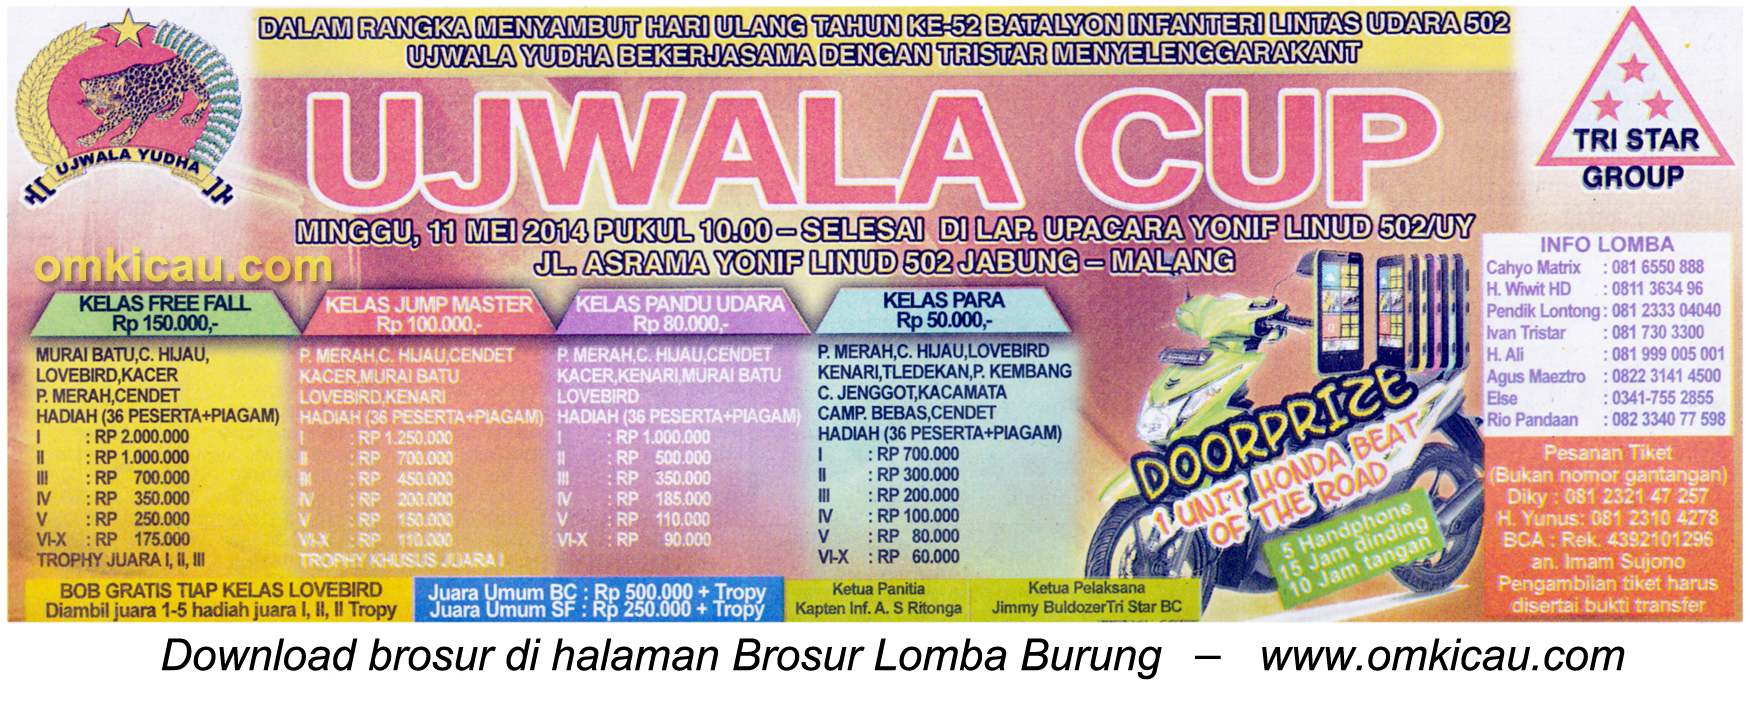 Brosur Lomba Burung Berkicau Ujwala Cup, Malang, 11 Mei 2014